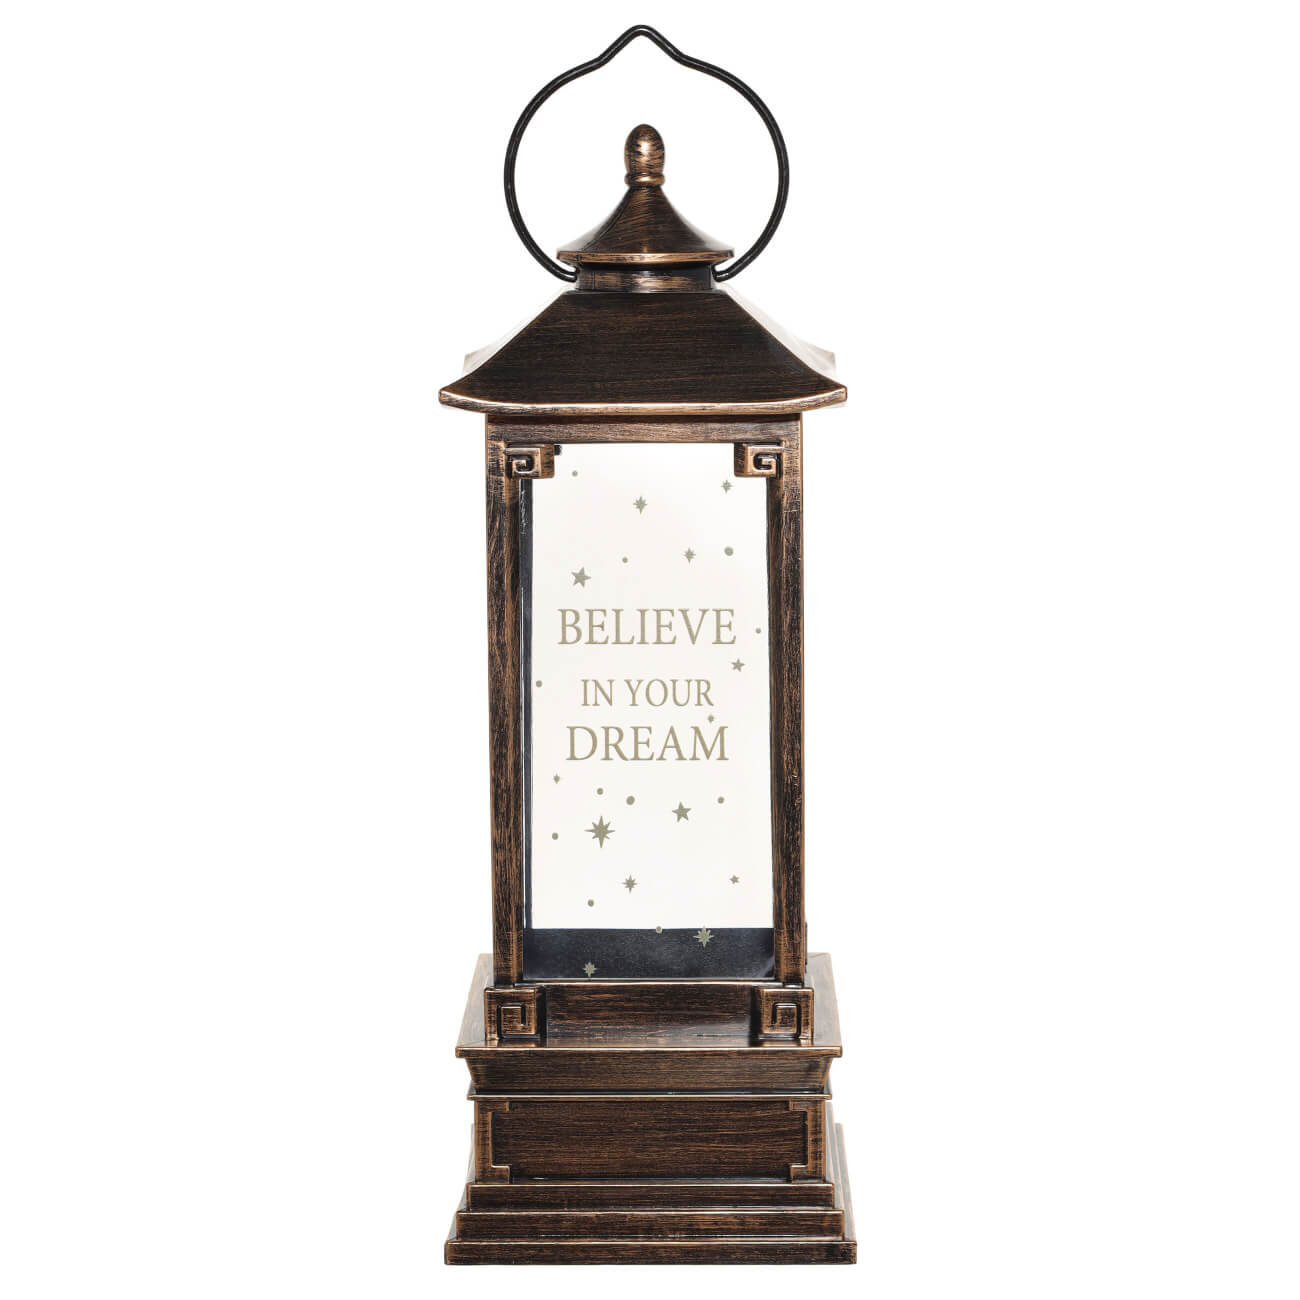 Снежный фонарь, 28 см, с подсветкой, пластик, бронзовый, Believe in your dream, Bronze style - фото 1